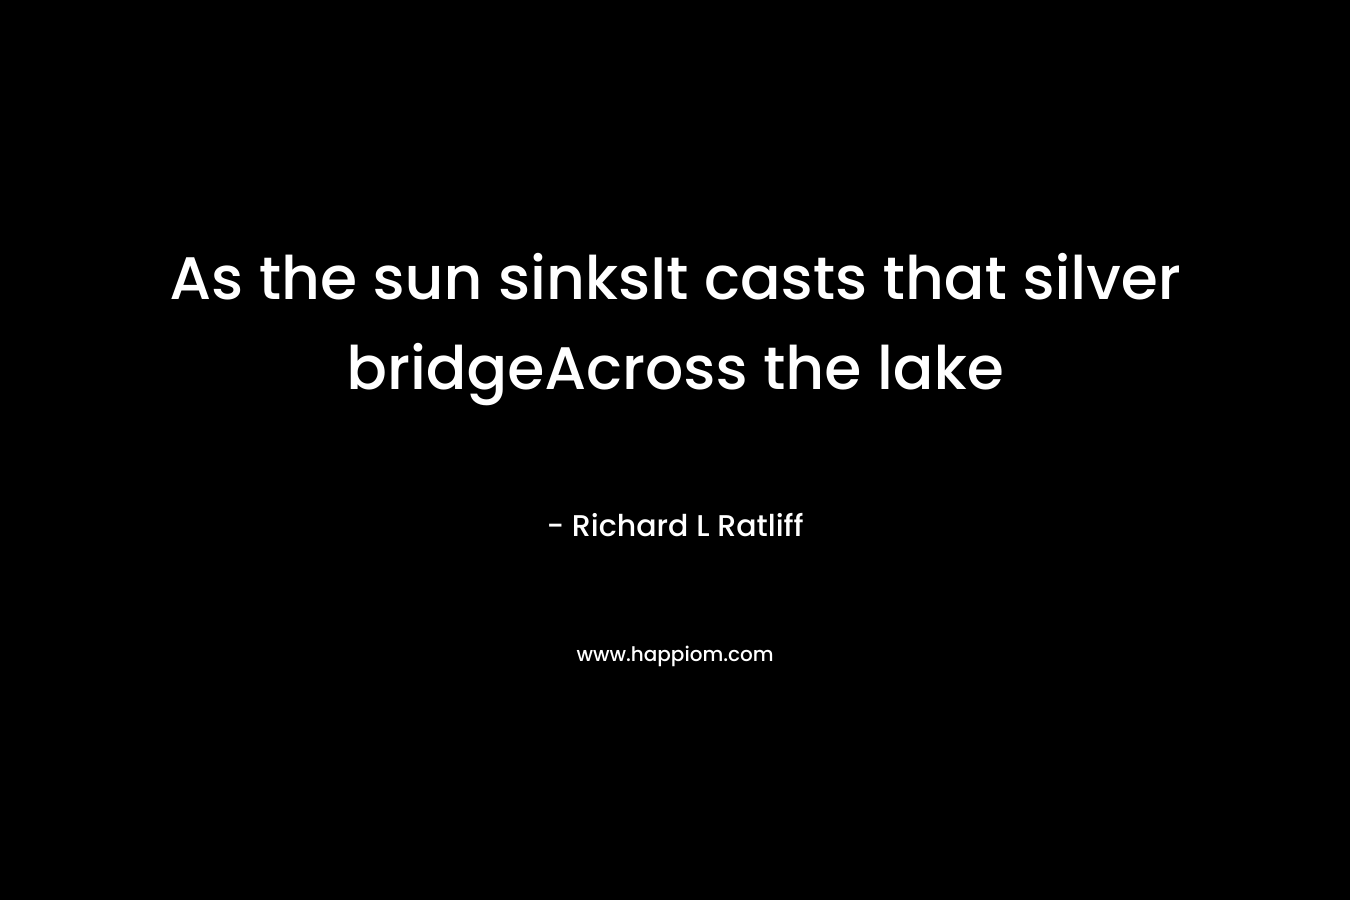 As the sun sinksIt casts that silver bridgeAcross the lake